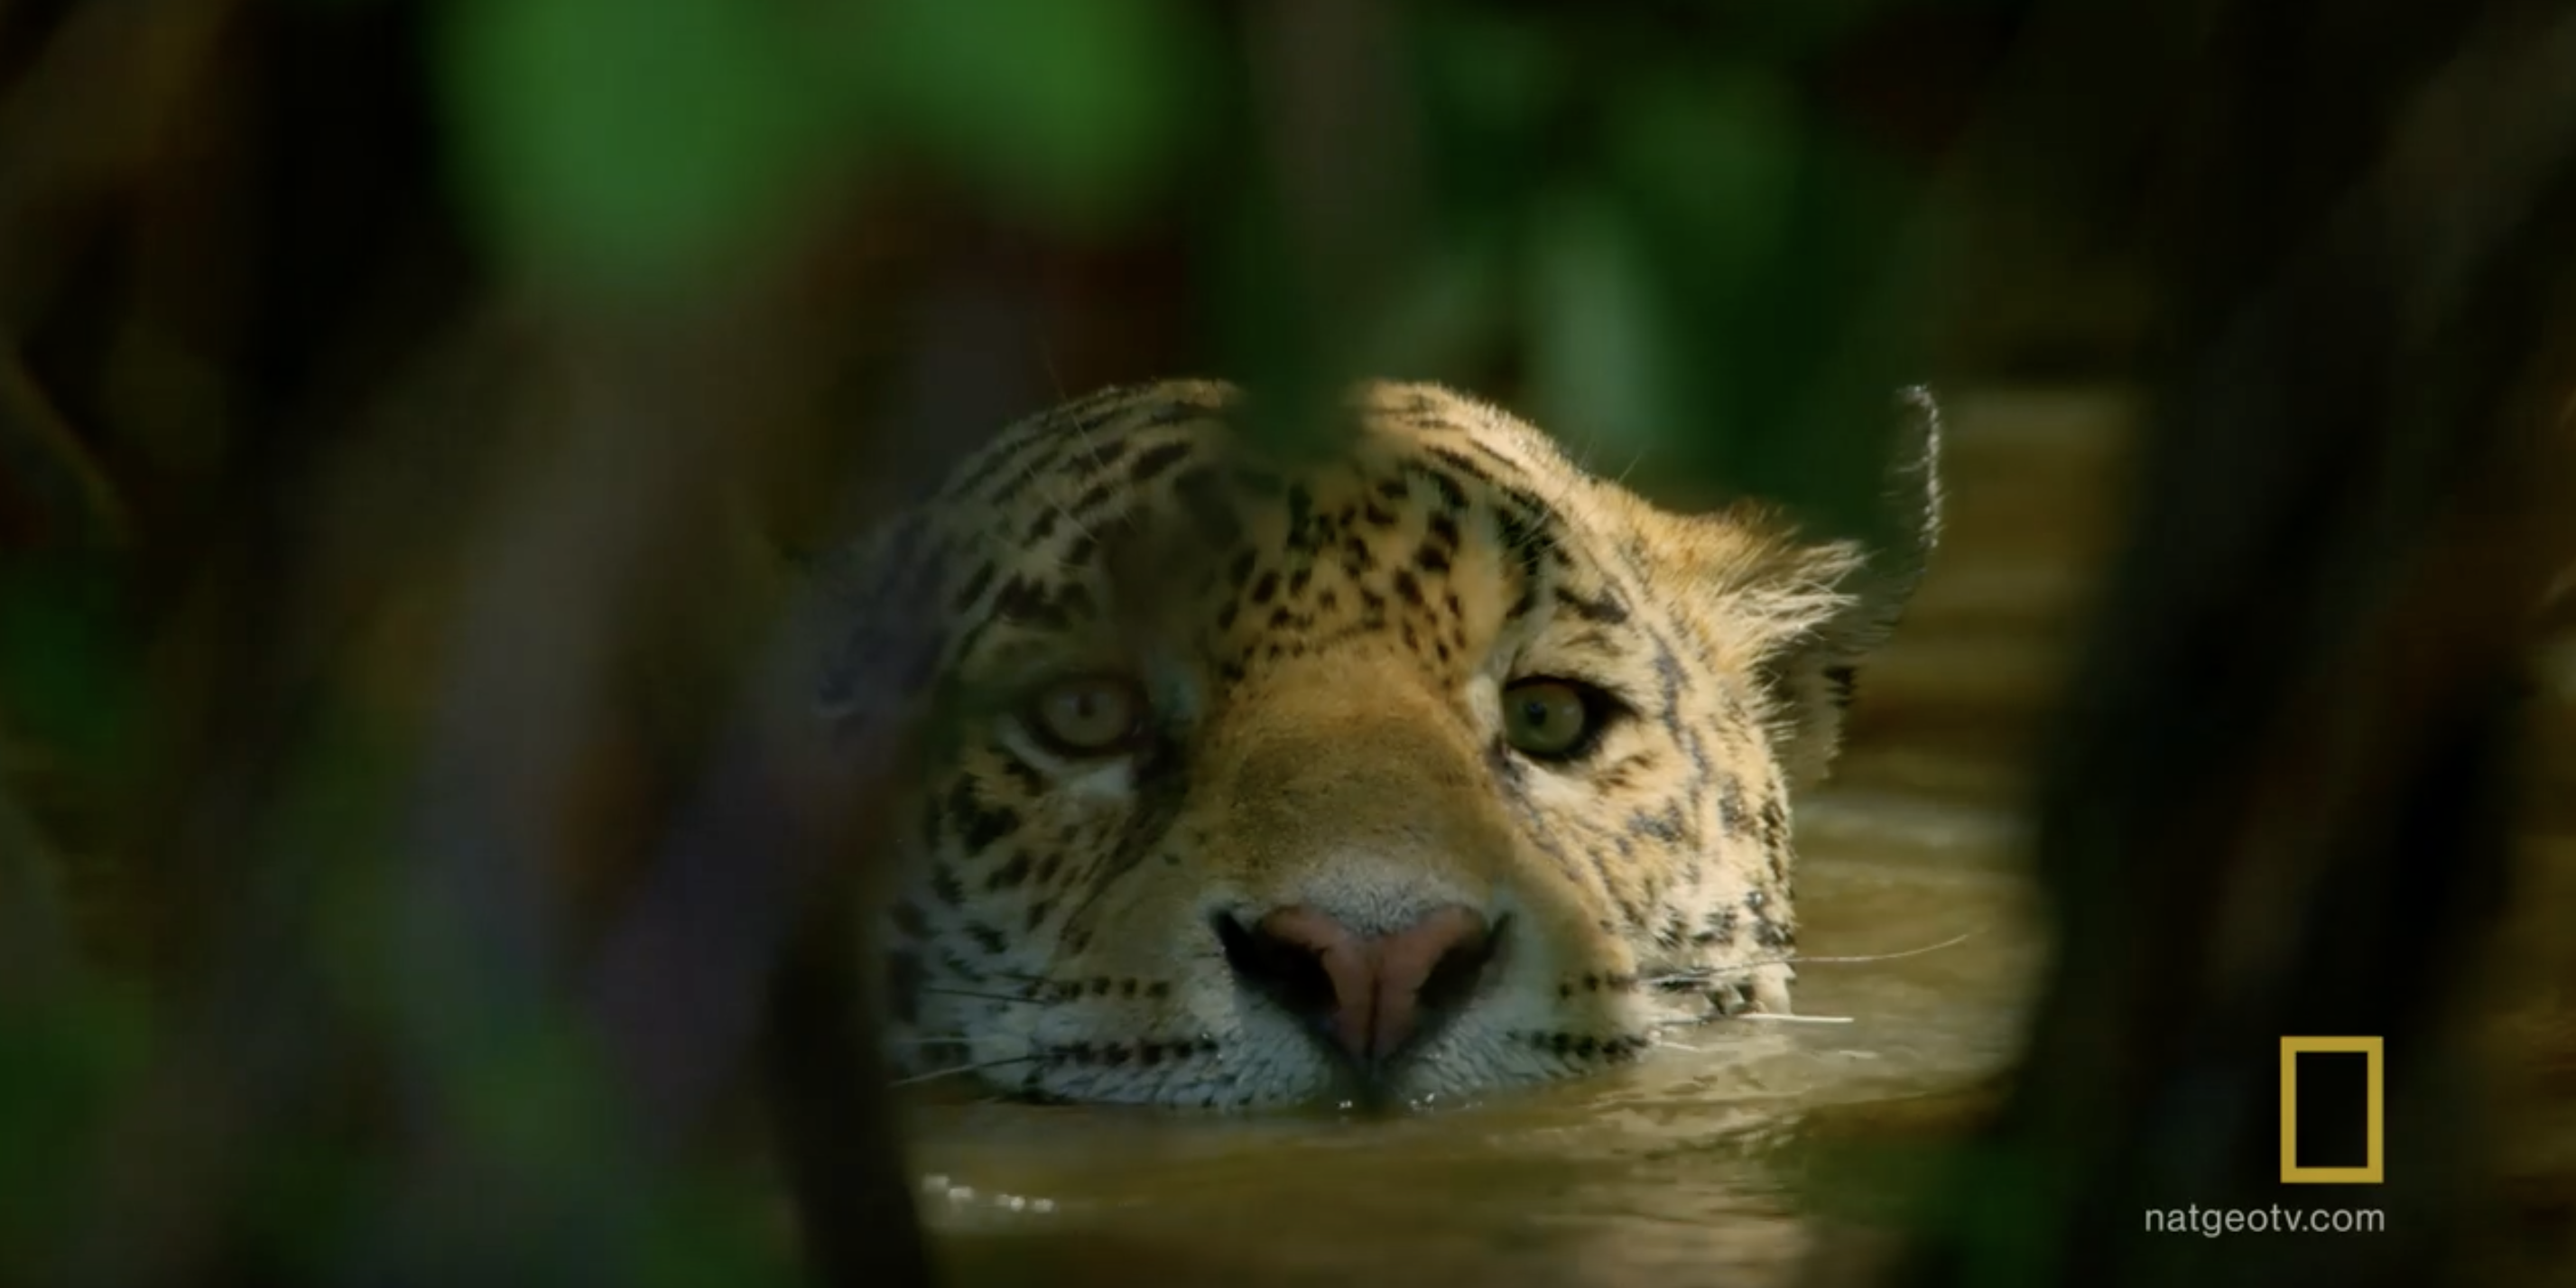 Hostile Planet Footage Shows A Jaguar Hunting... A Crocodile